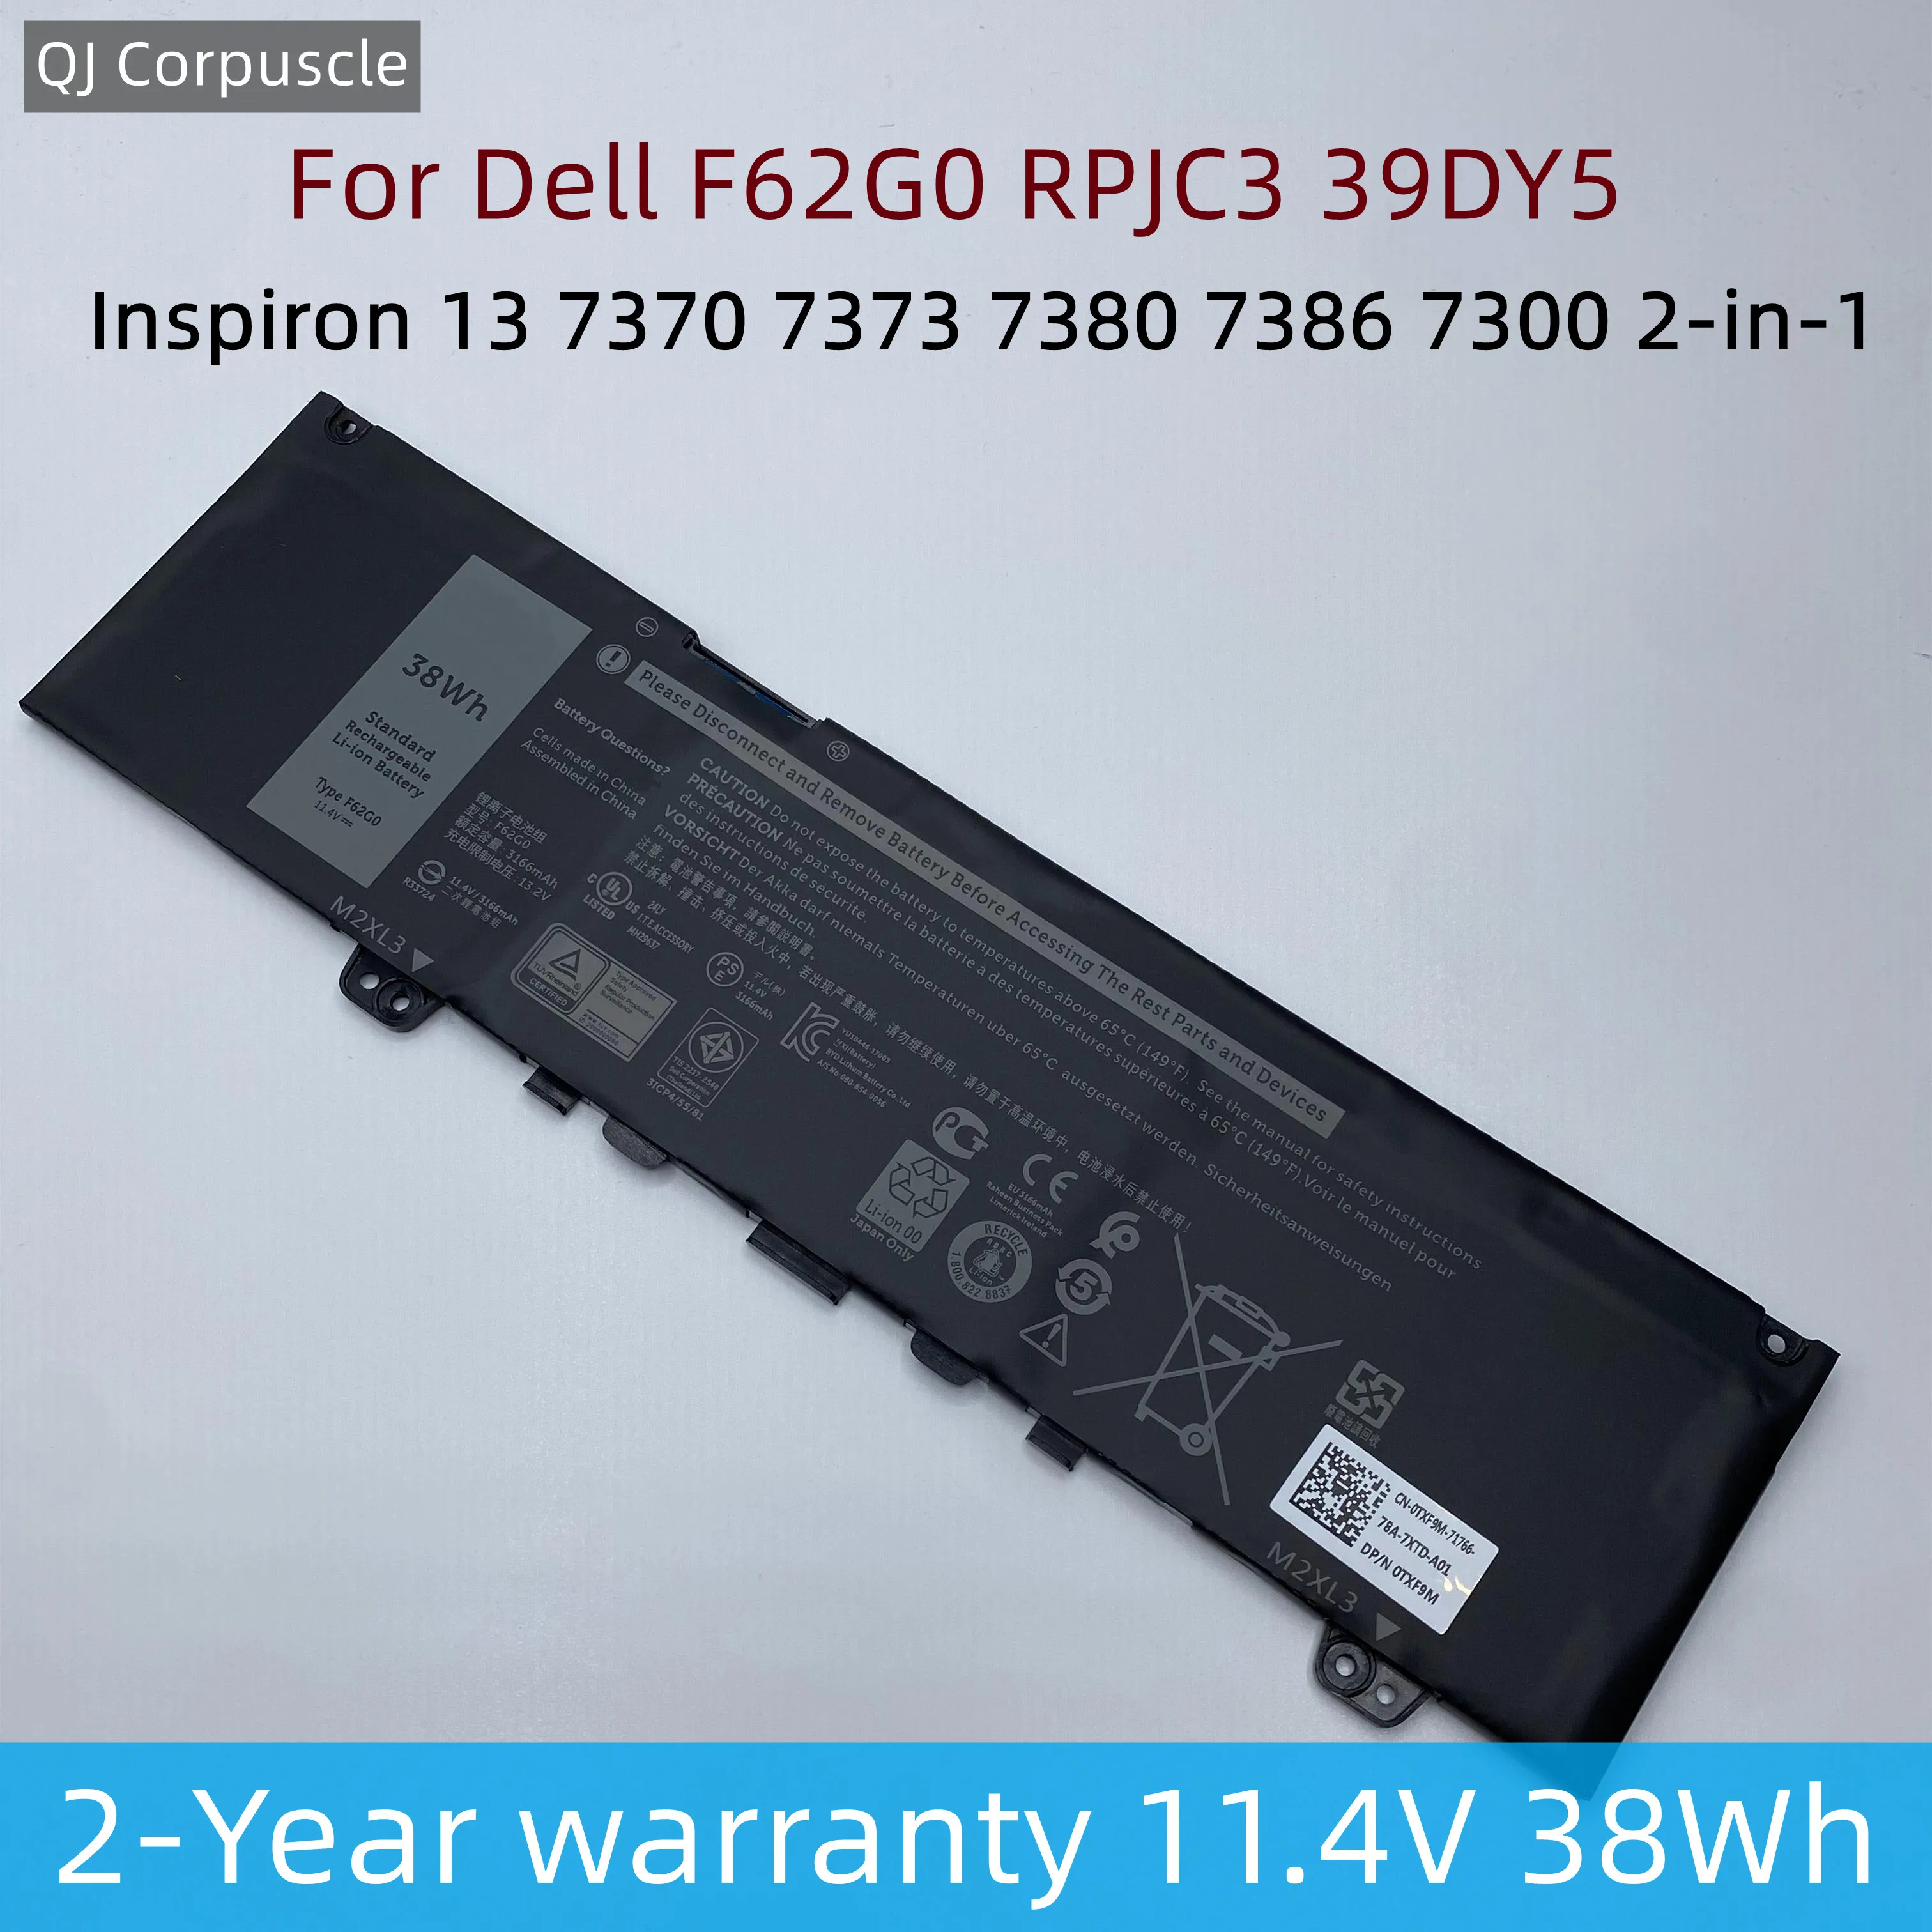 

Новый аккумулятор F62G0 11,4 в 38 Втч 3166 мАч для ноутбука Dell Inspiron 13 7370 7373 7380 7386 2 в 1 Vostro 5370 P83G P87G RPJC3 039DY5